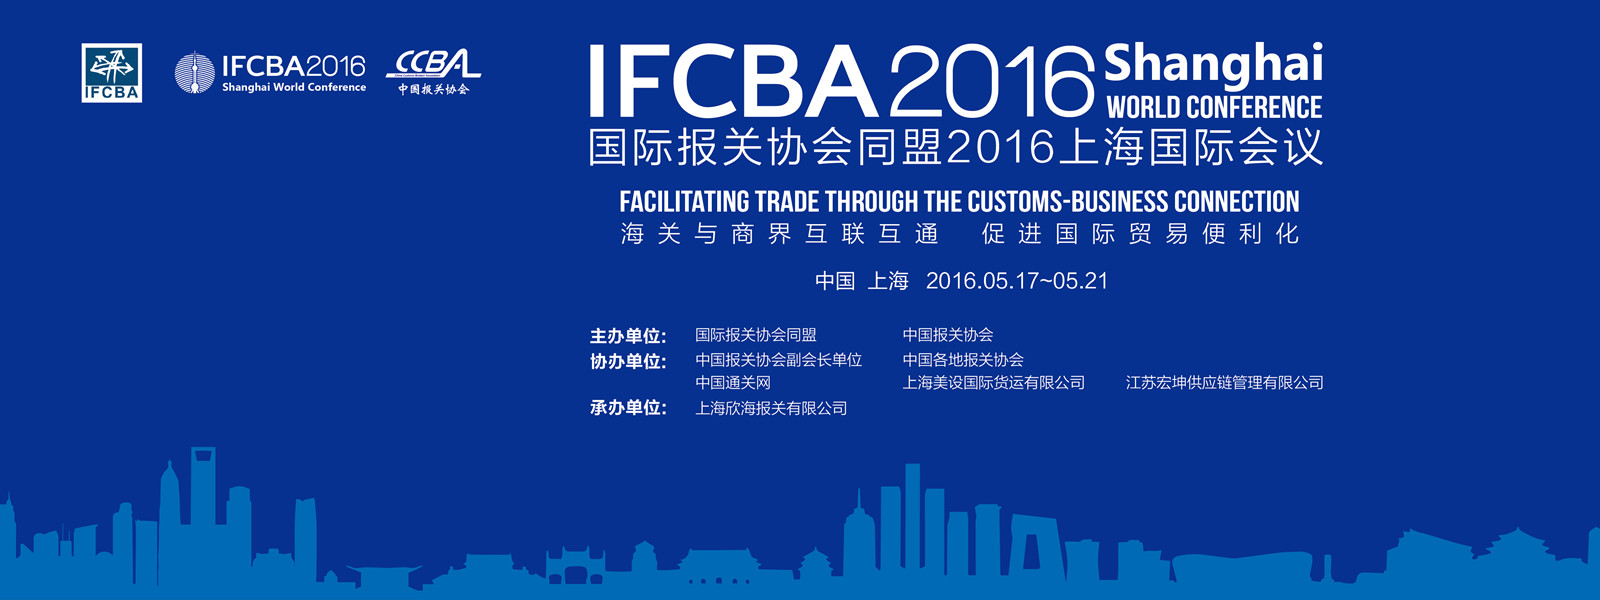 2016IFCBA花絮36—IFCBA2016天津商务职业学院副校长发言